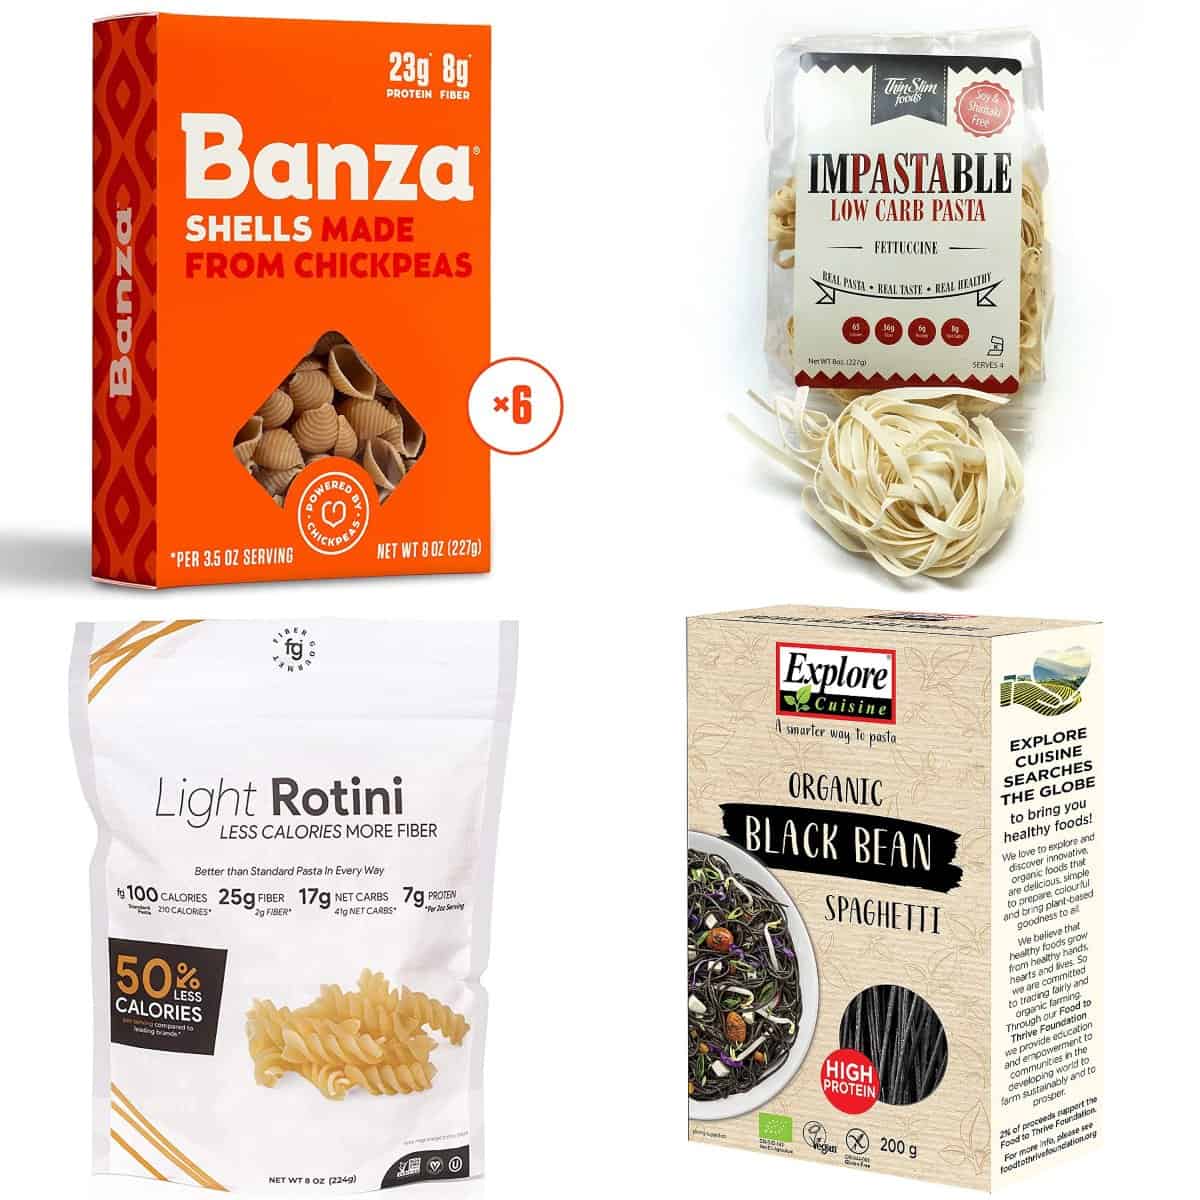 https://diabetesstrong.com/wp-content/uploads/2020/10/low-carb-pasta-review-featured.jpg